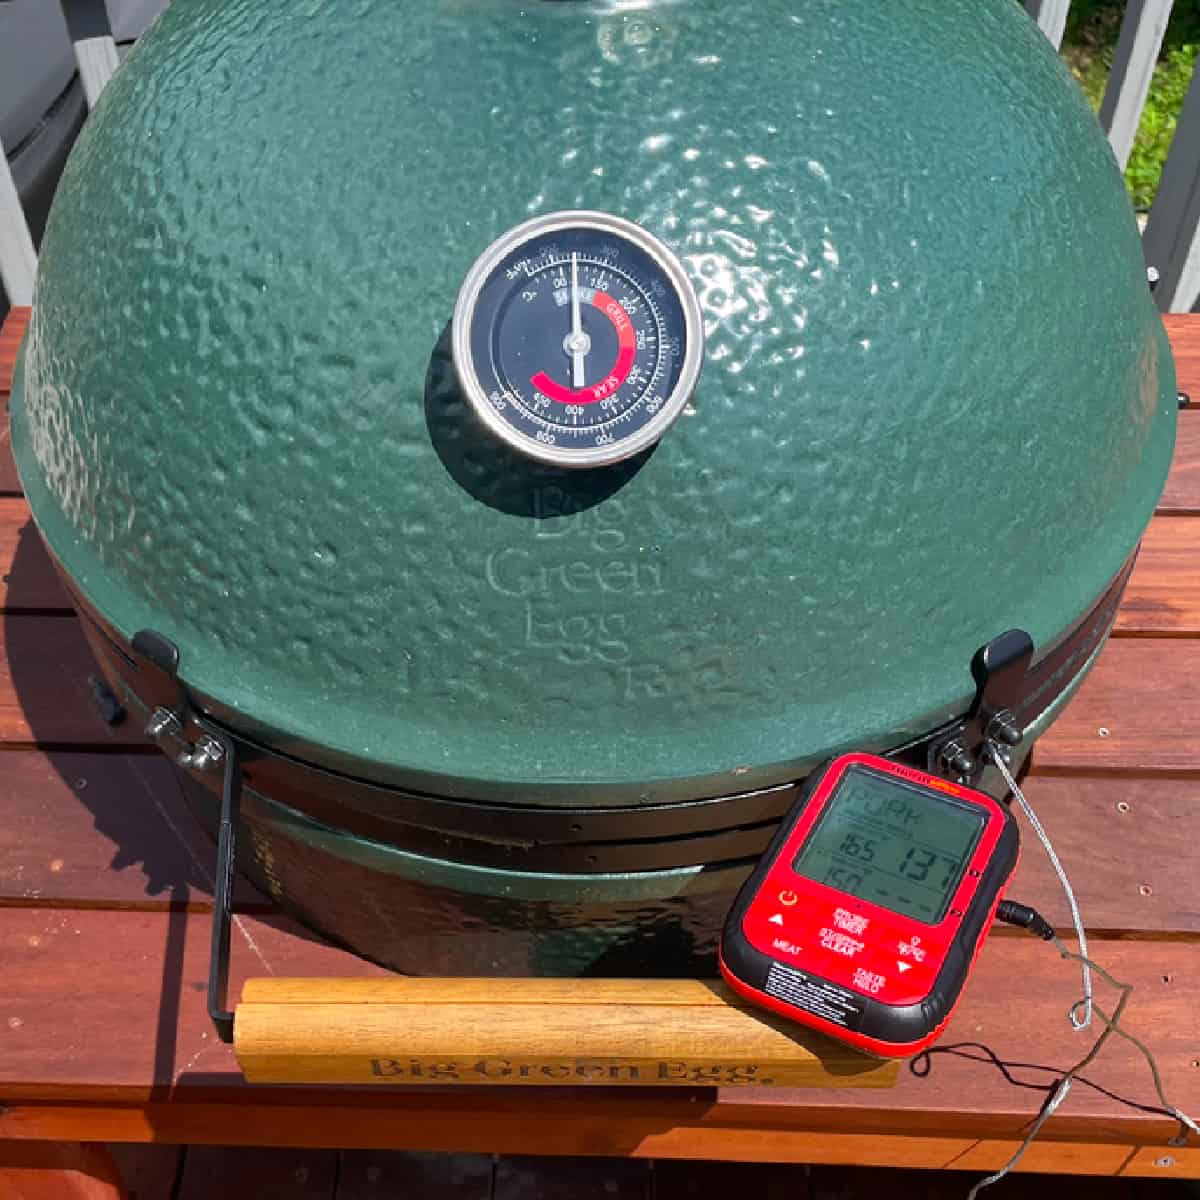 Dual-Probe Wireless Thermometer - Big Green Egg